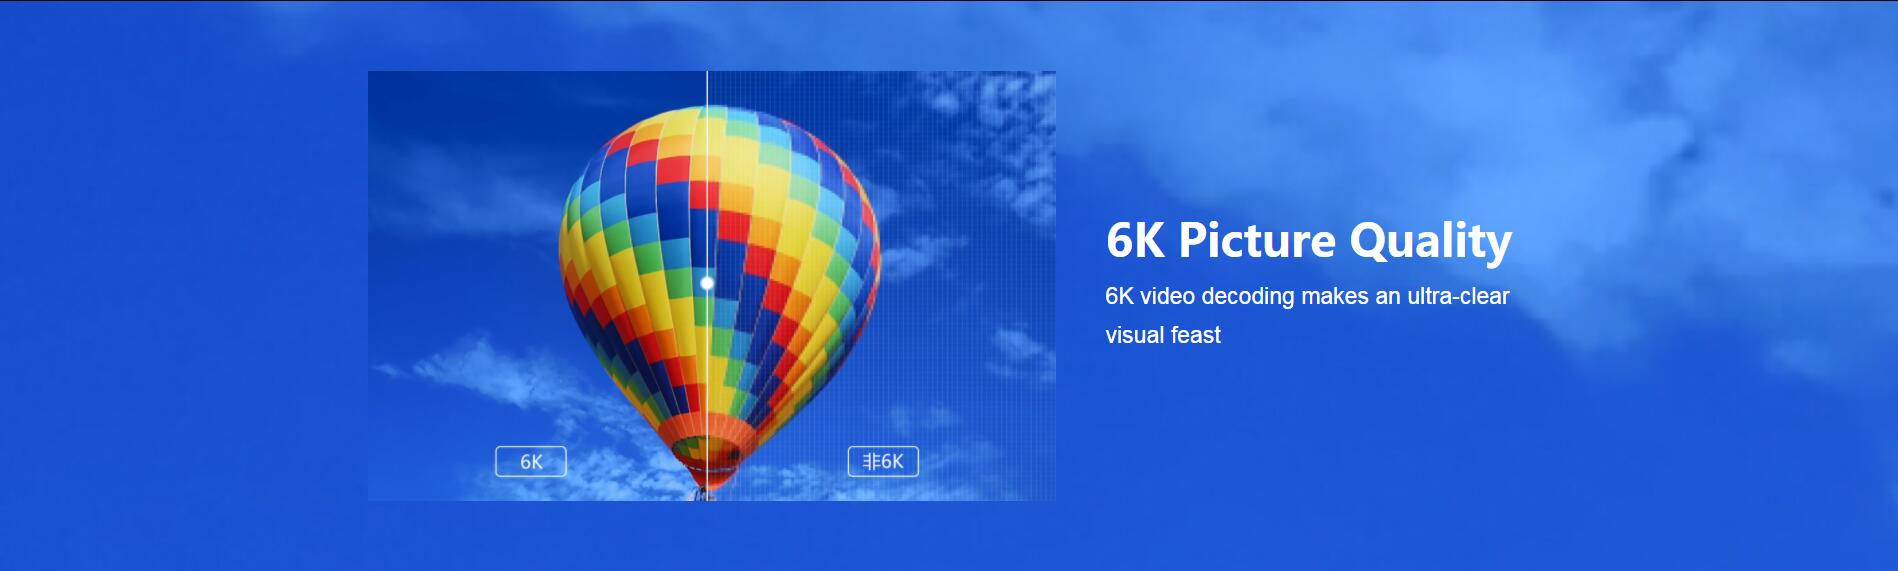 Телевизионная приставка EVPAD 5Max — качество изображения 6K